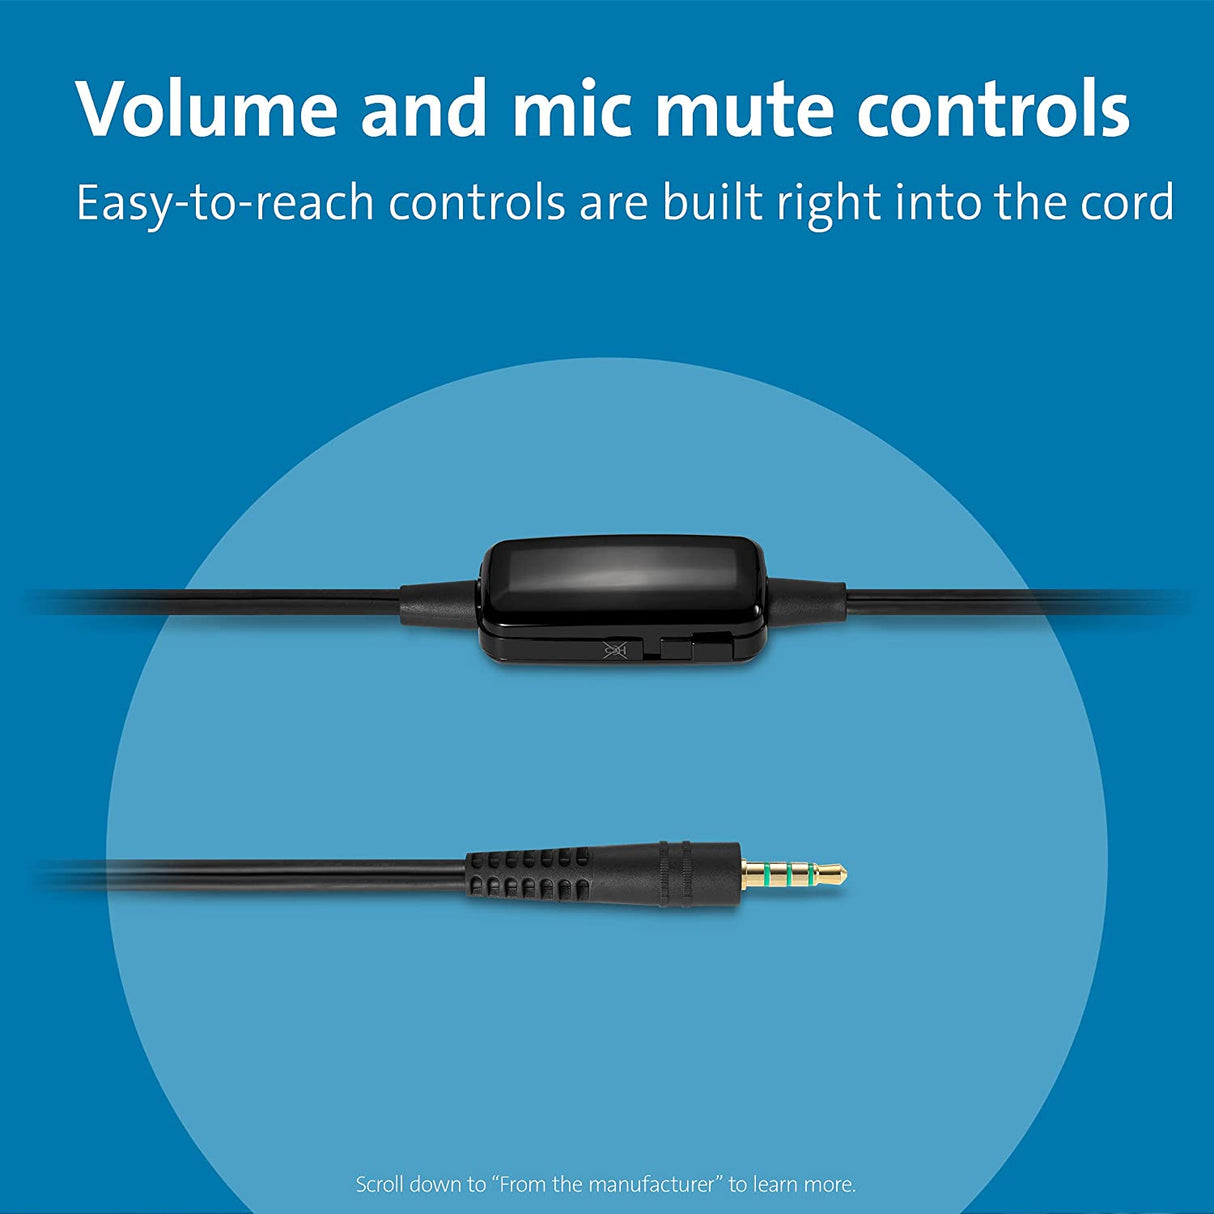 Kensington Hi-Fi Headphones with Mic &amp; Volume Control Button (K33597WW)